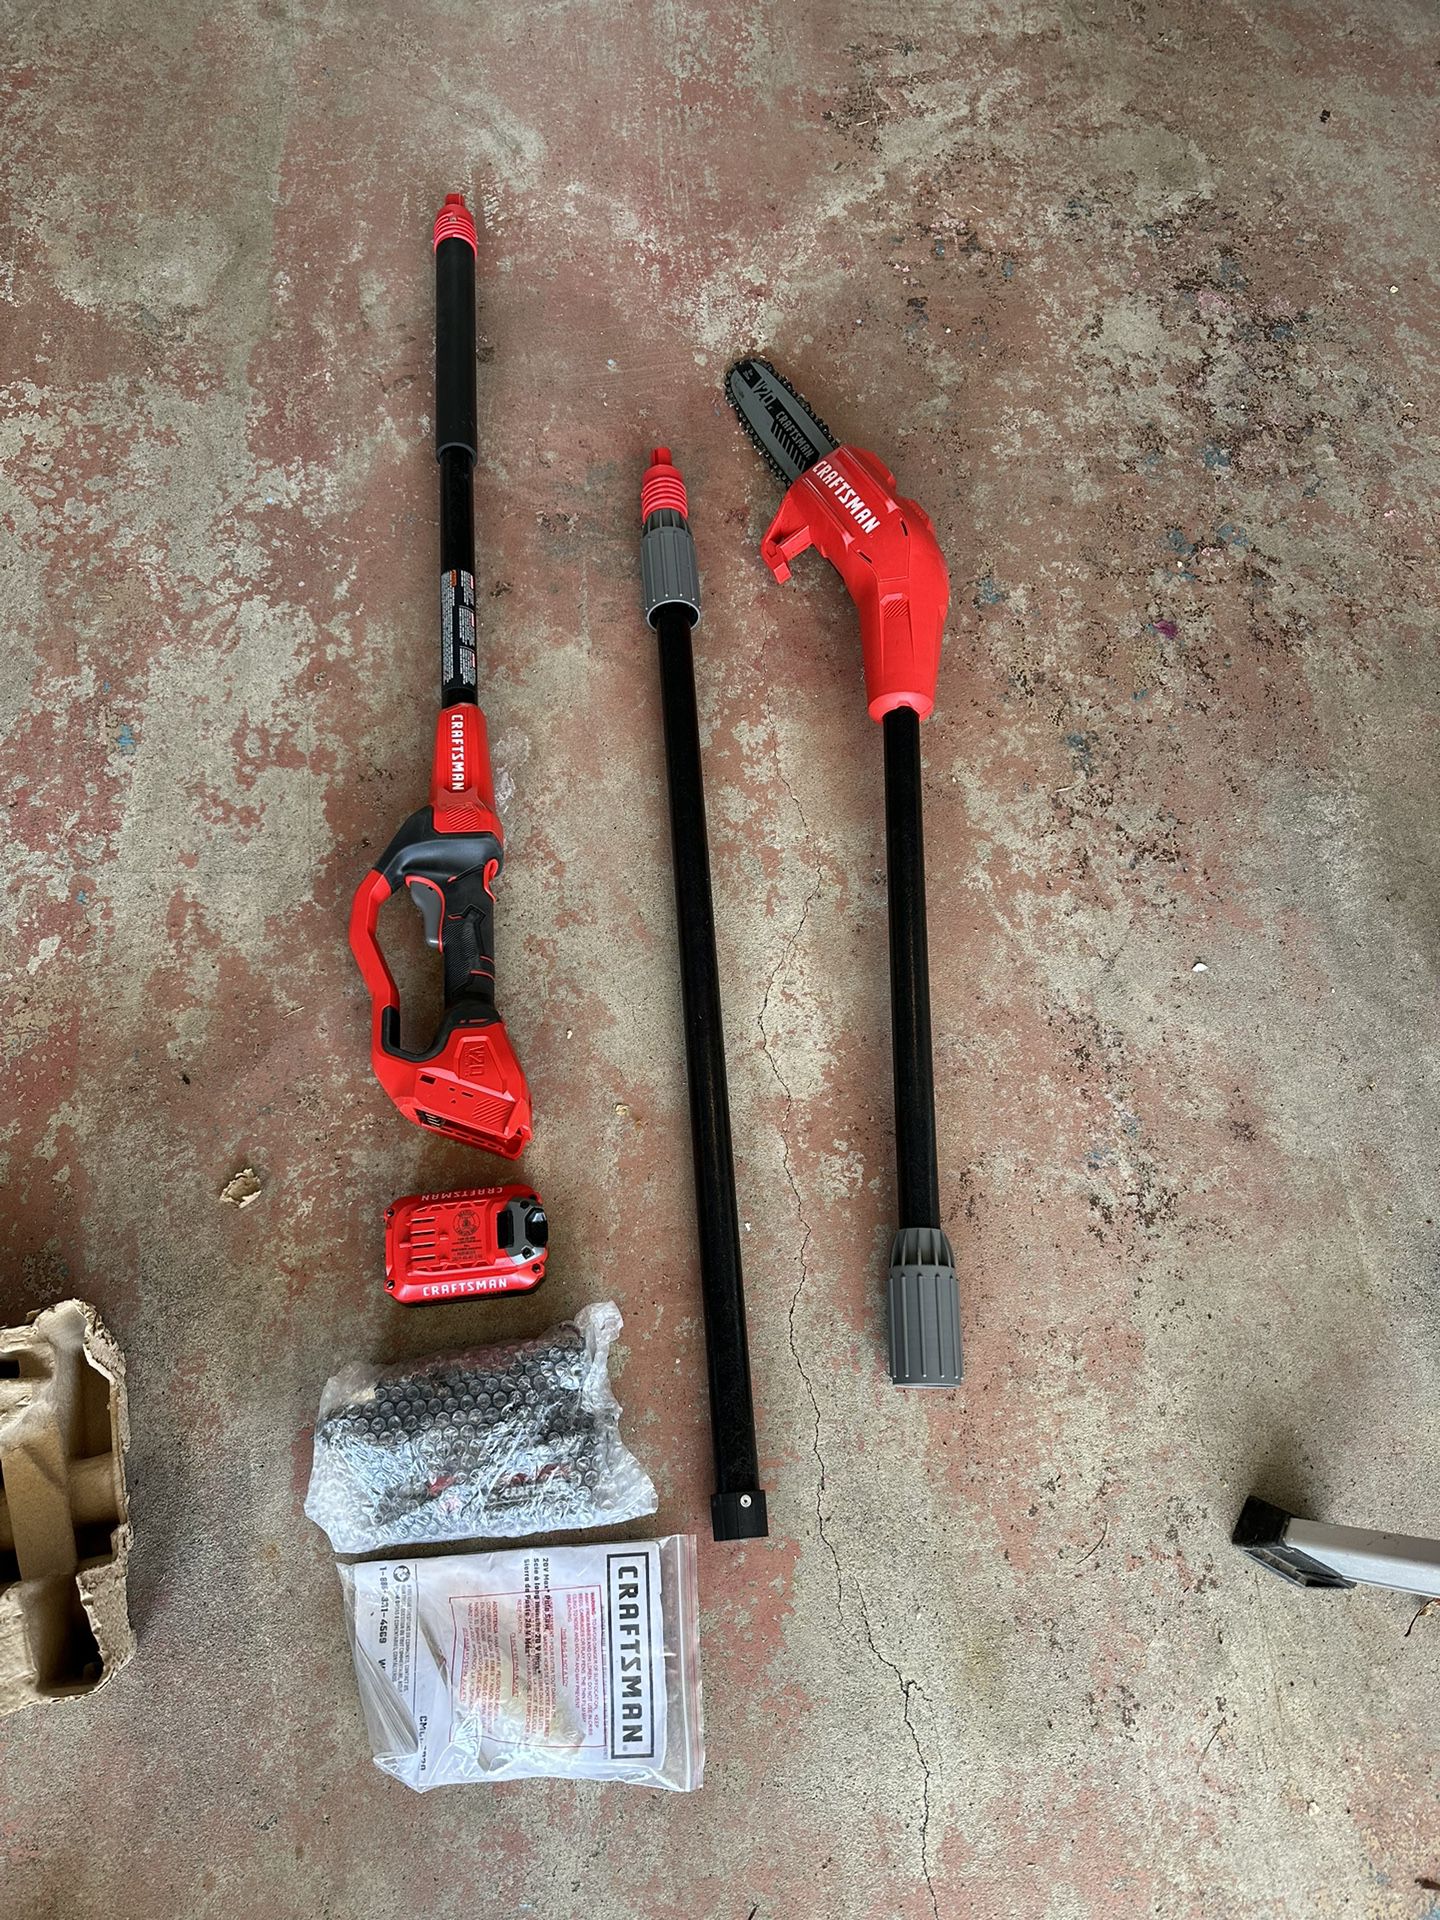 Craftsman 20v max pole saw